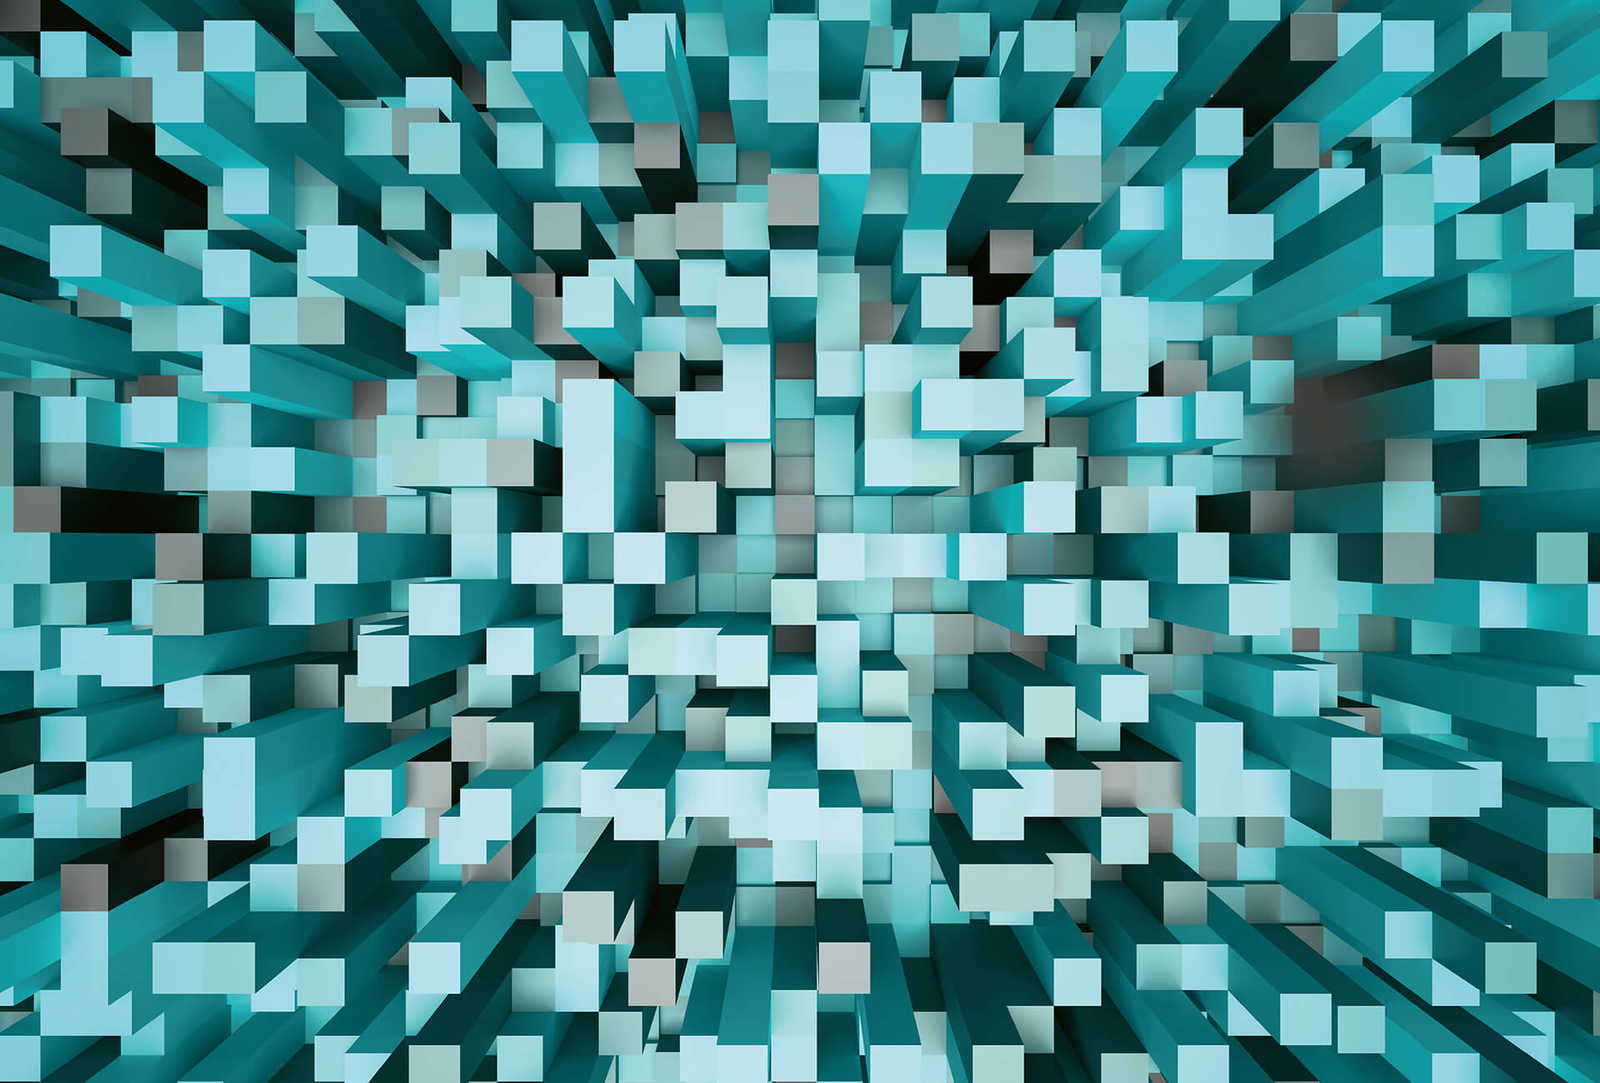         3D Fototapete Quadrat-Muster im Pixel-Stil – Türkis
    